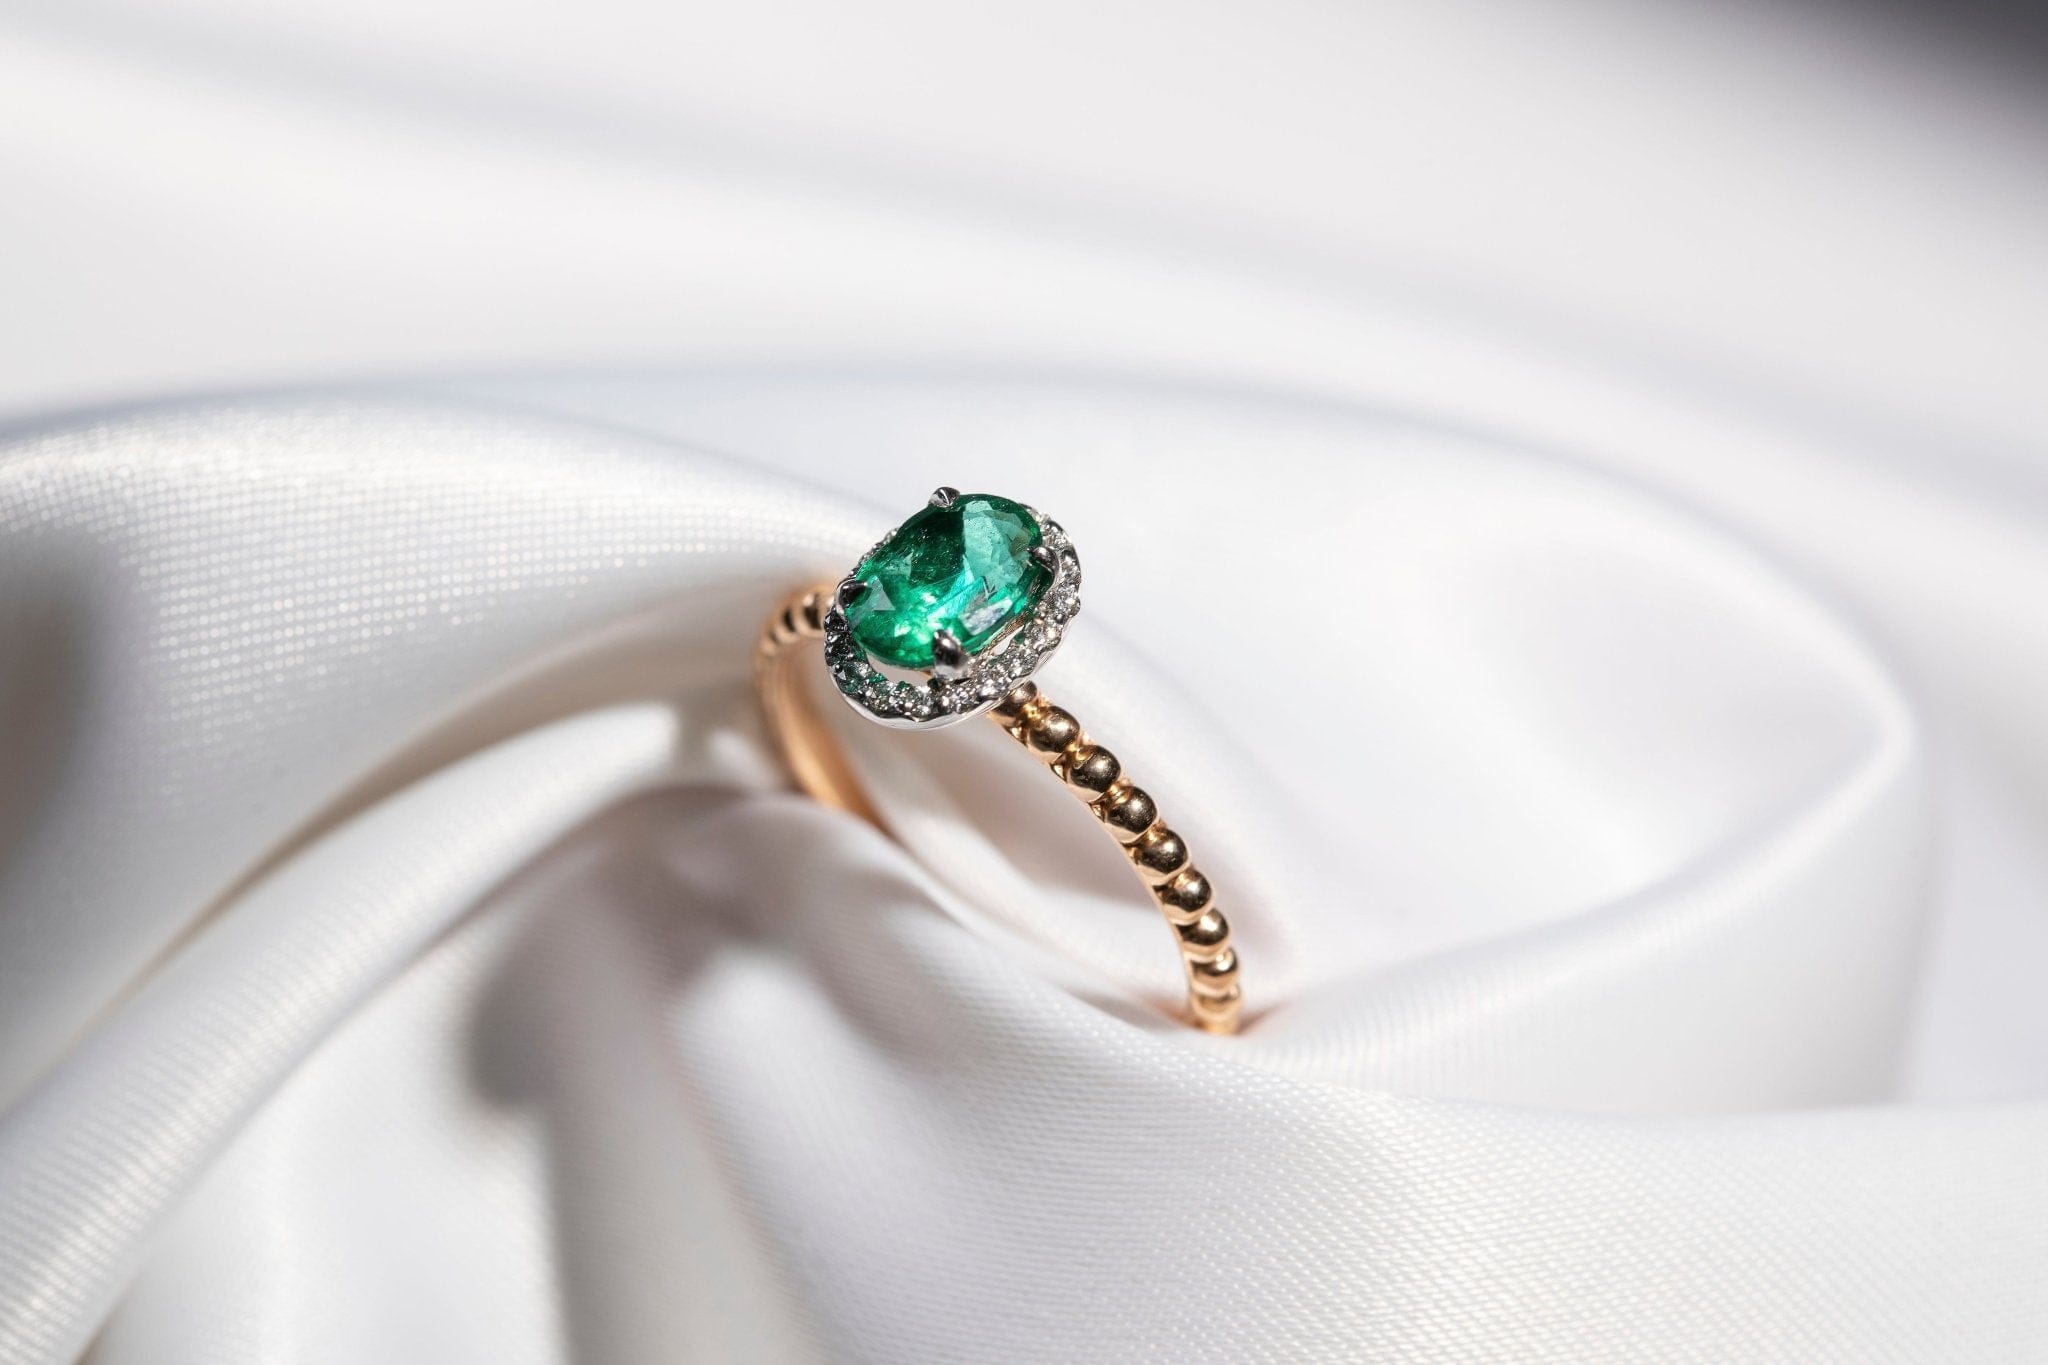 14K Oval Emerald & Diamond Celtic Trinity Engagement Ring